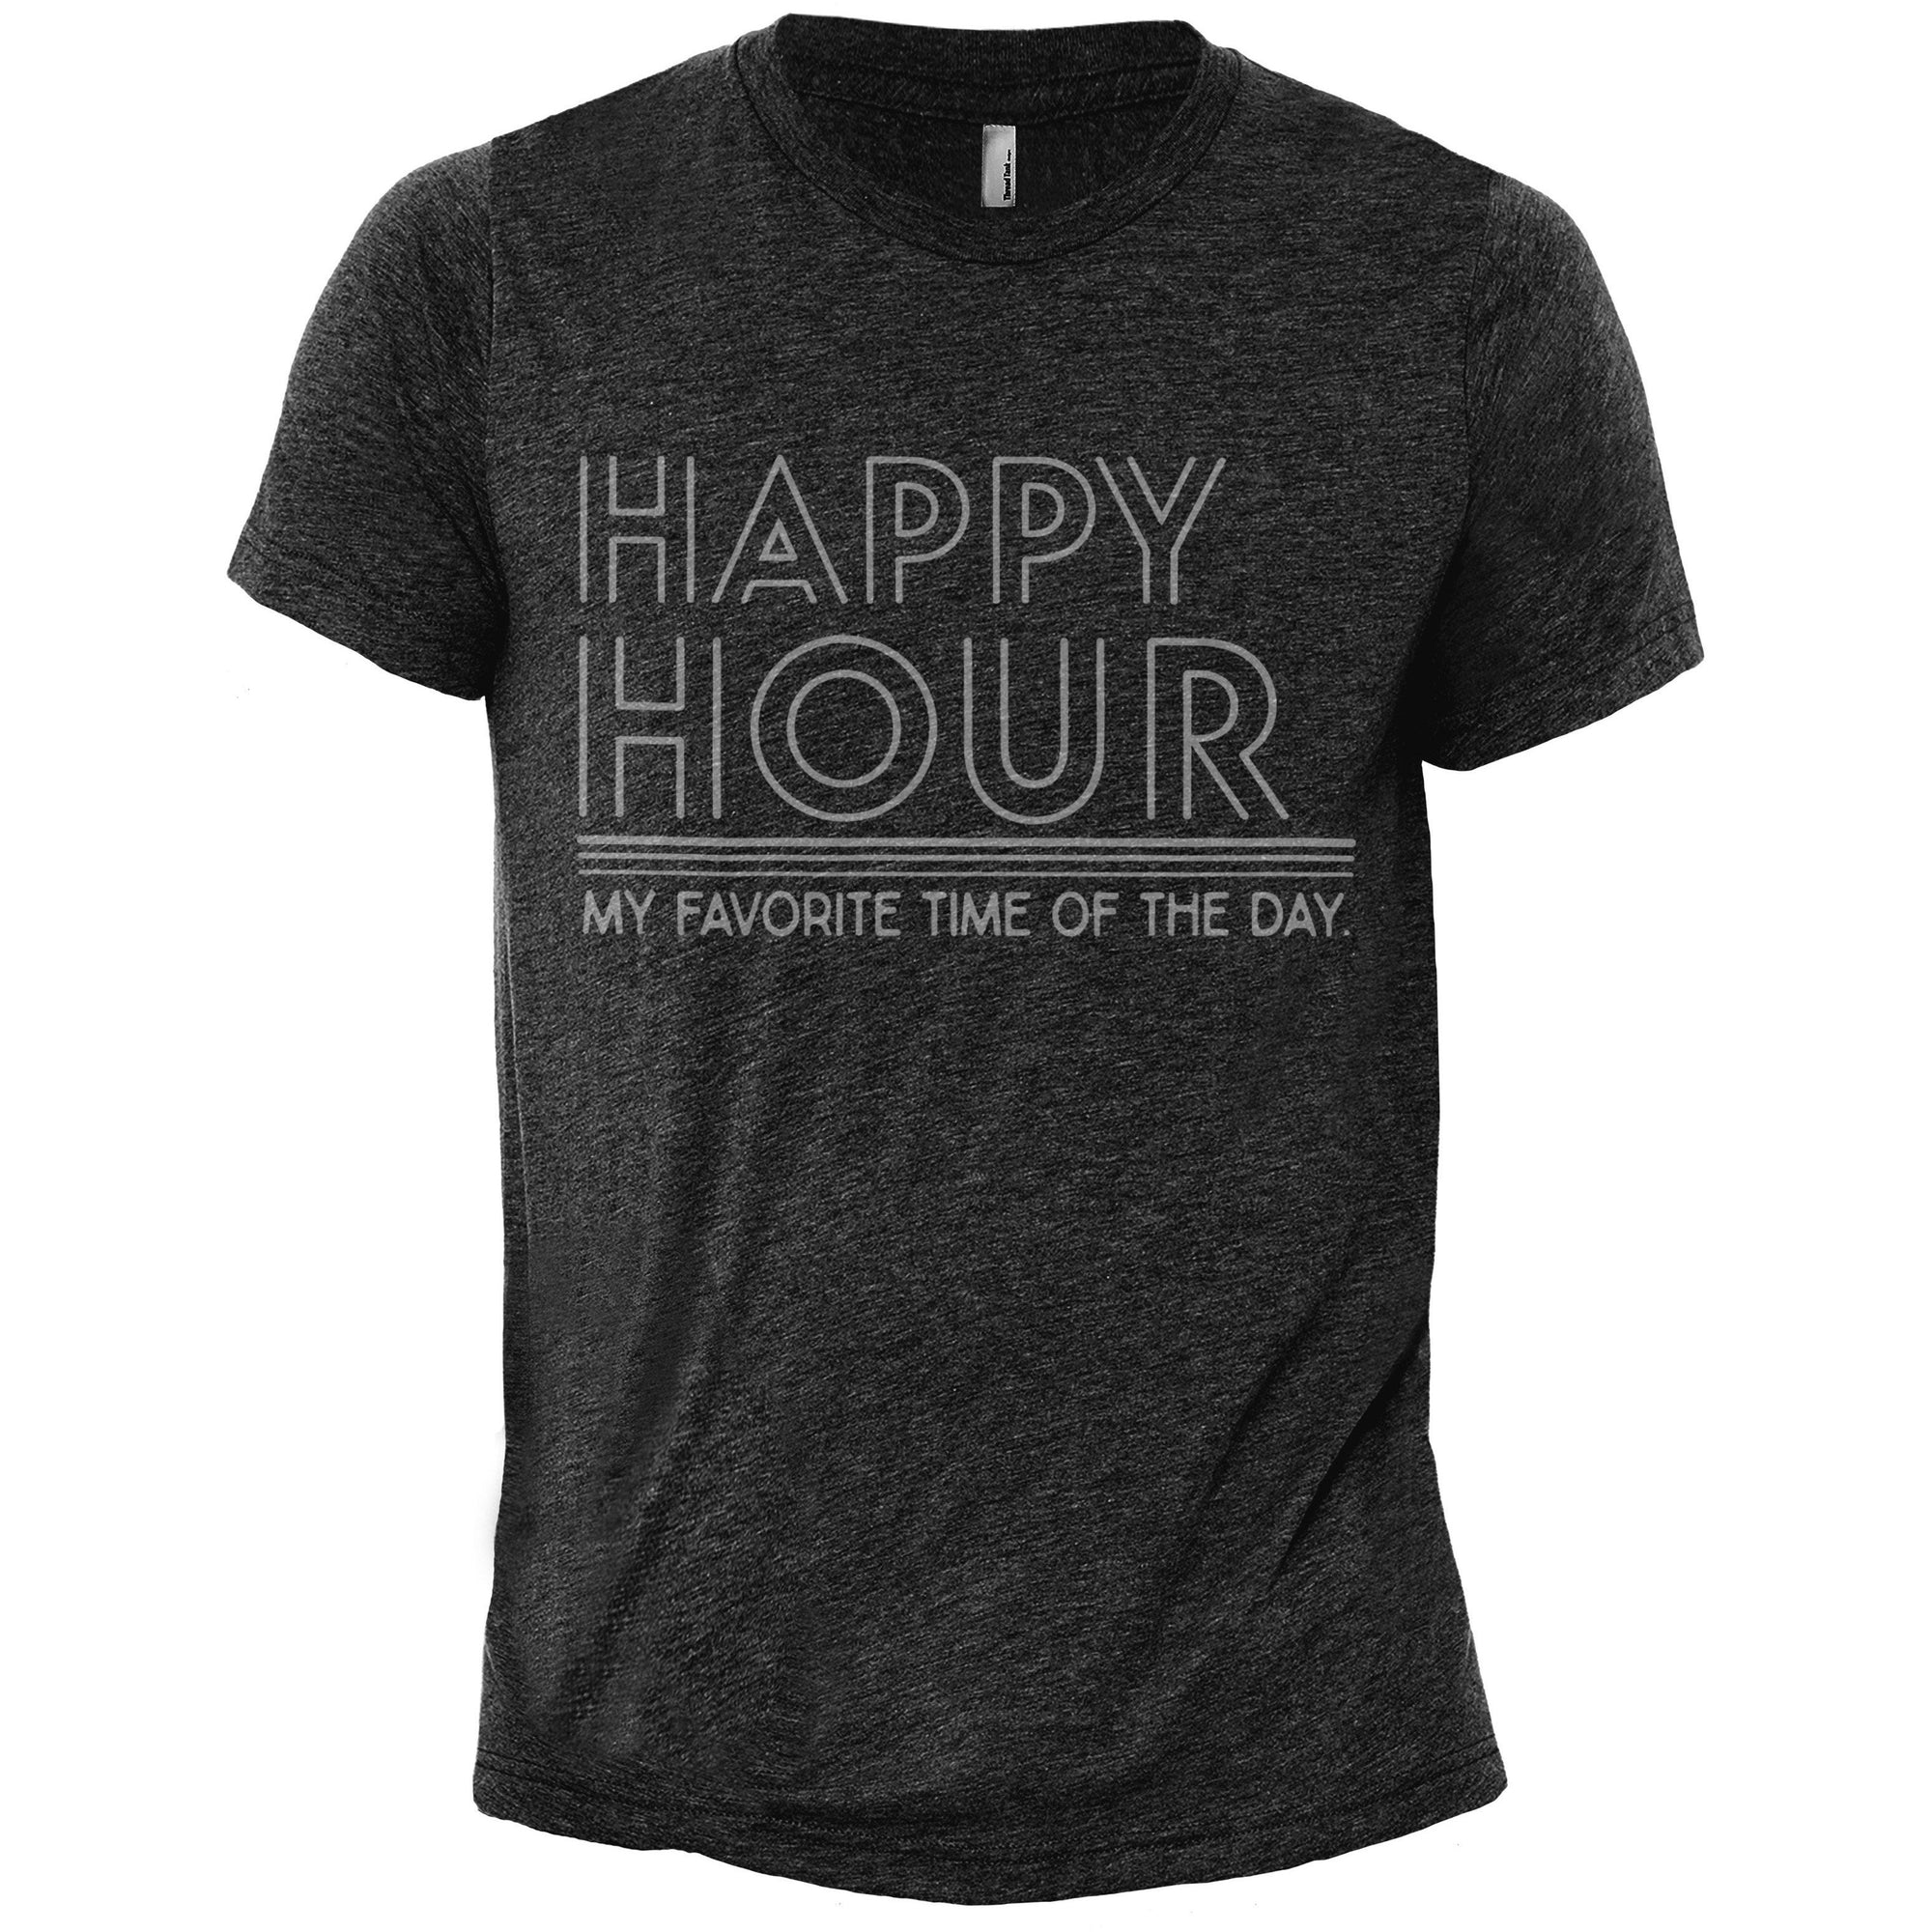 Happy Hour Heather Grey Printed Graphic Men's Crew T-Shirt Tee